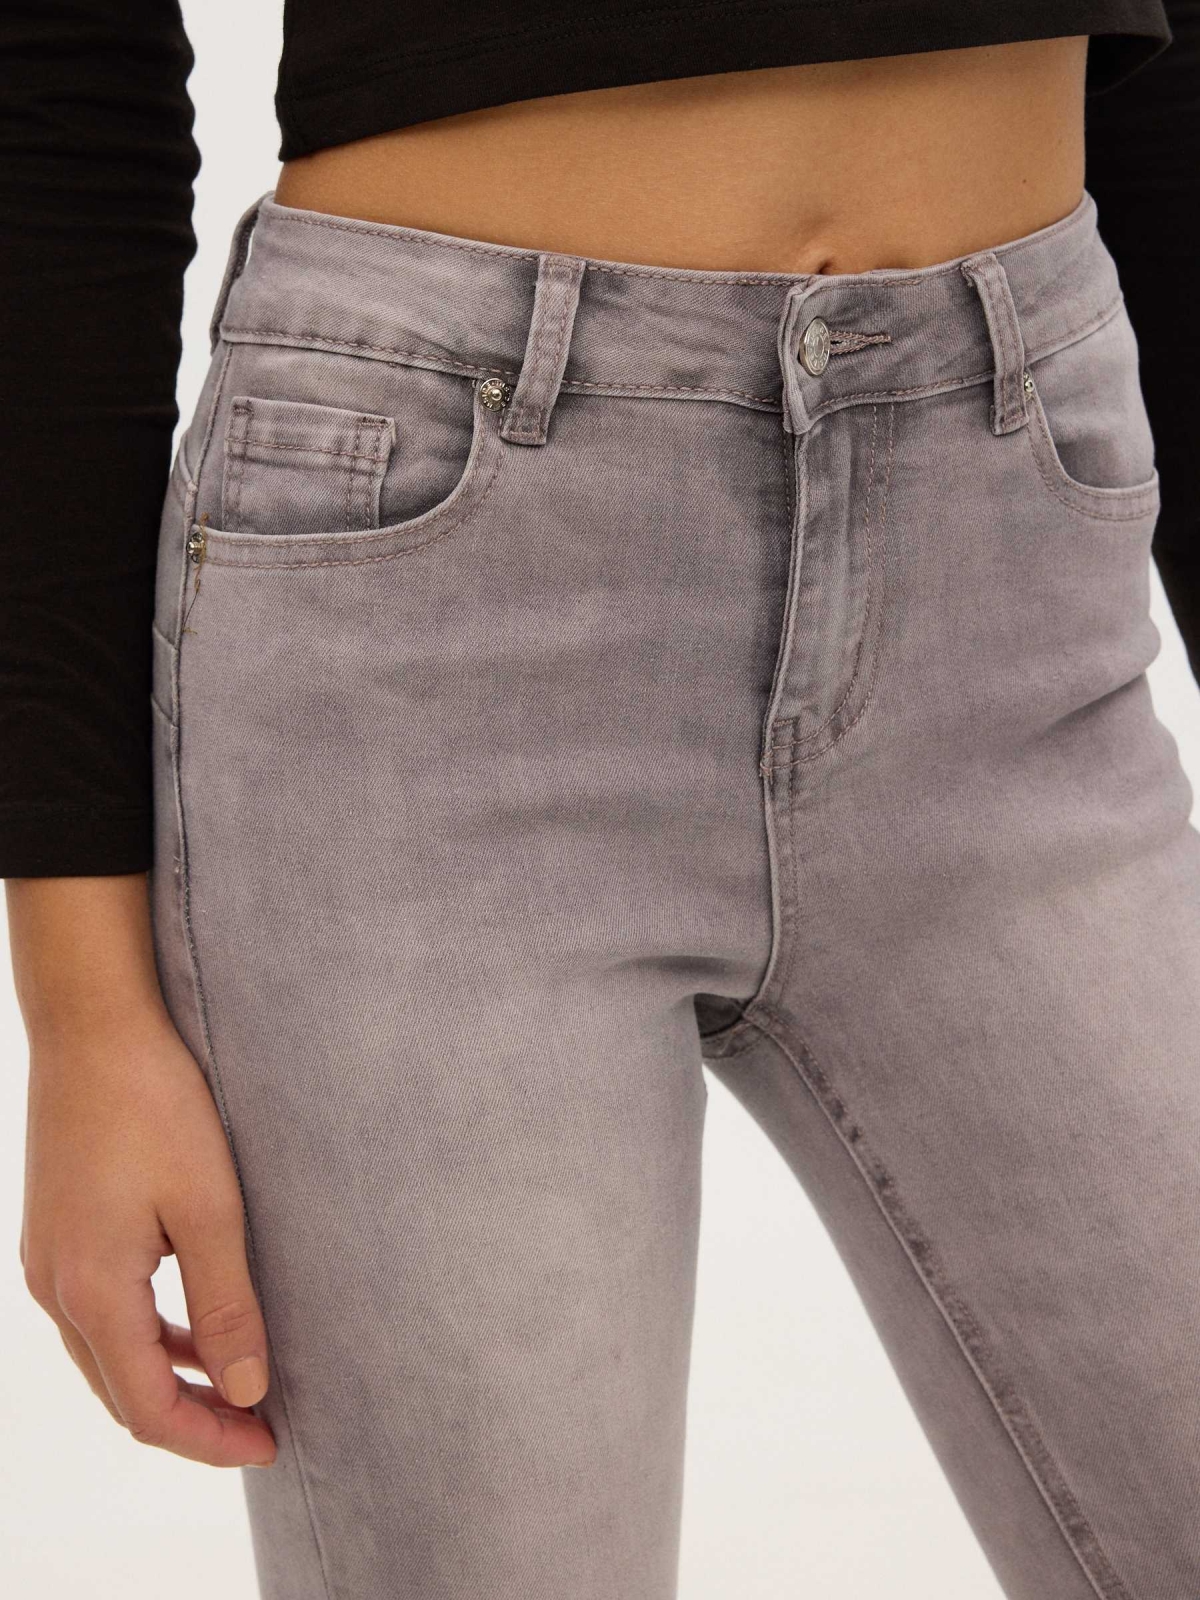 Jeans skinny push up gris claro vista detalle